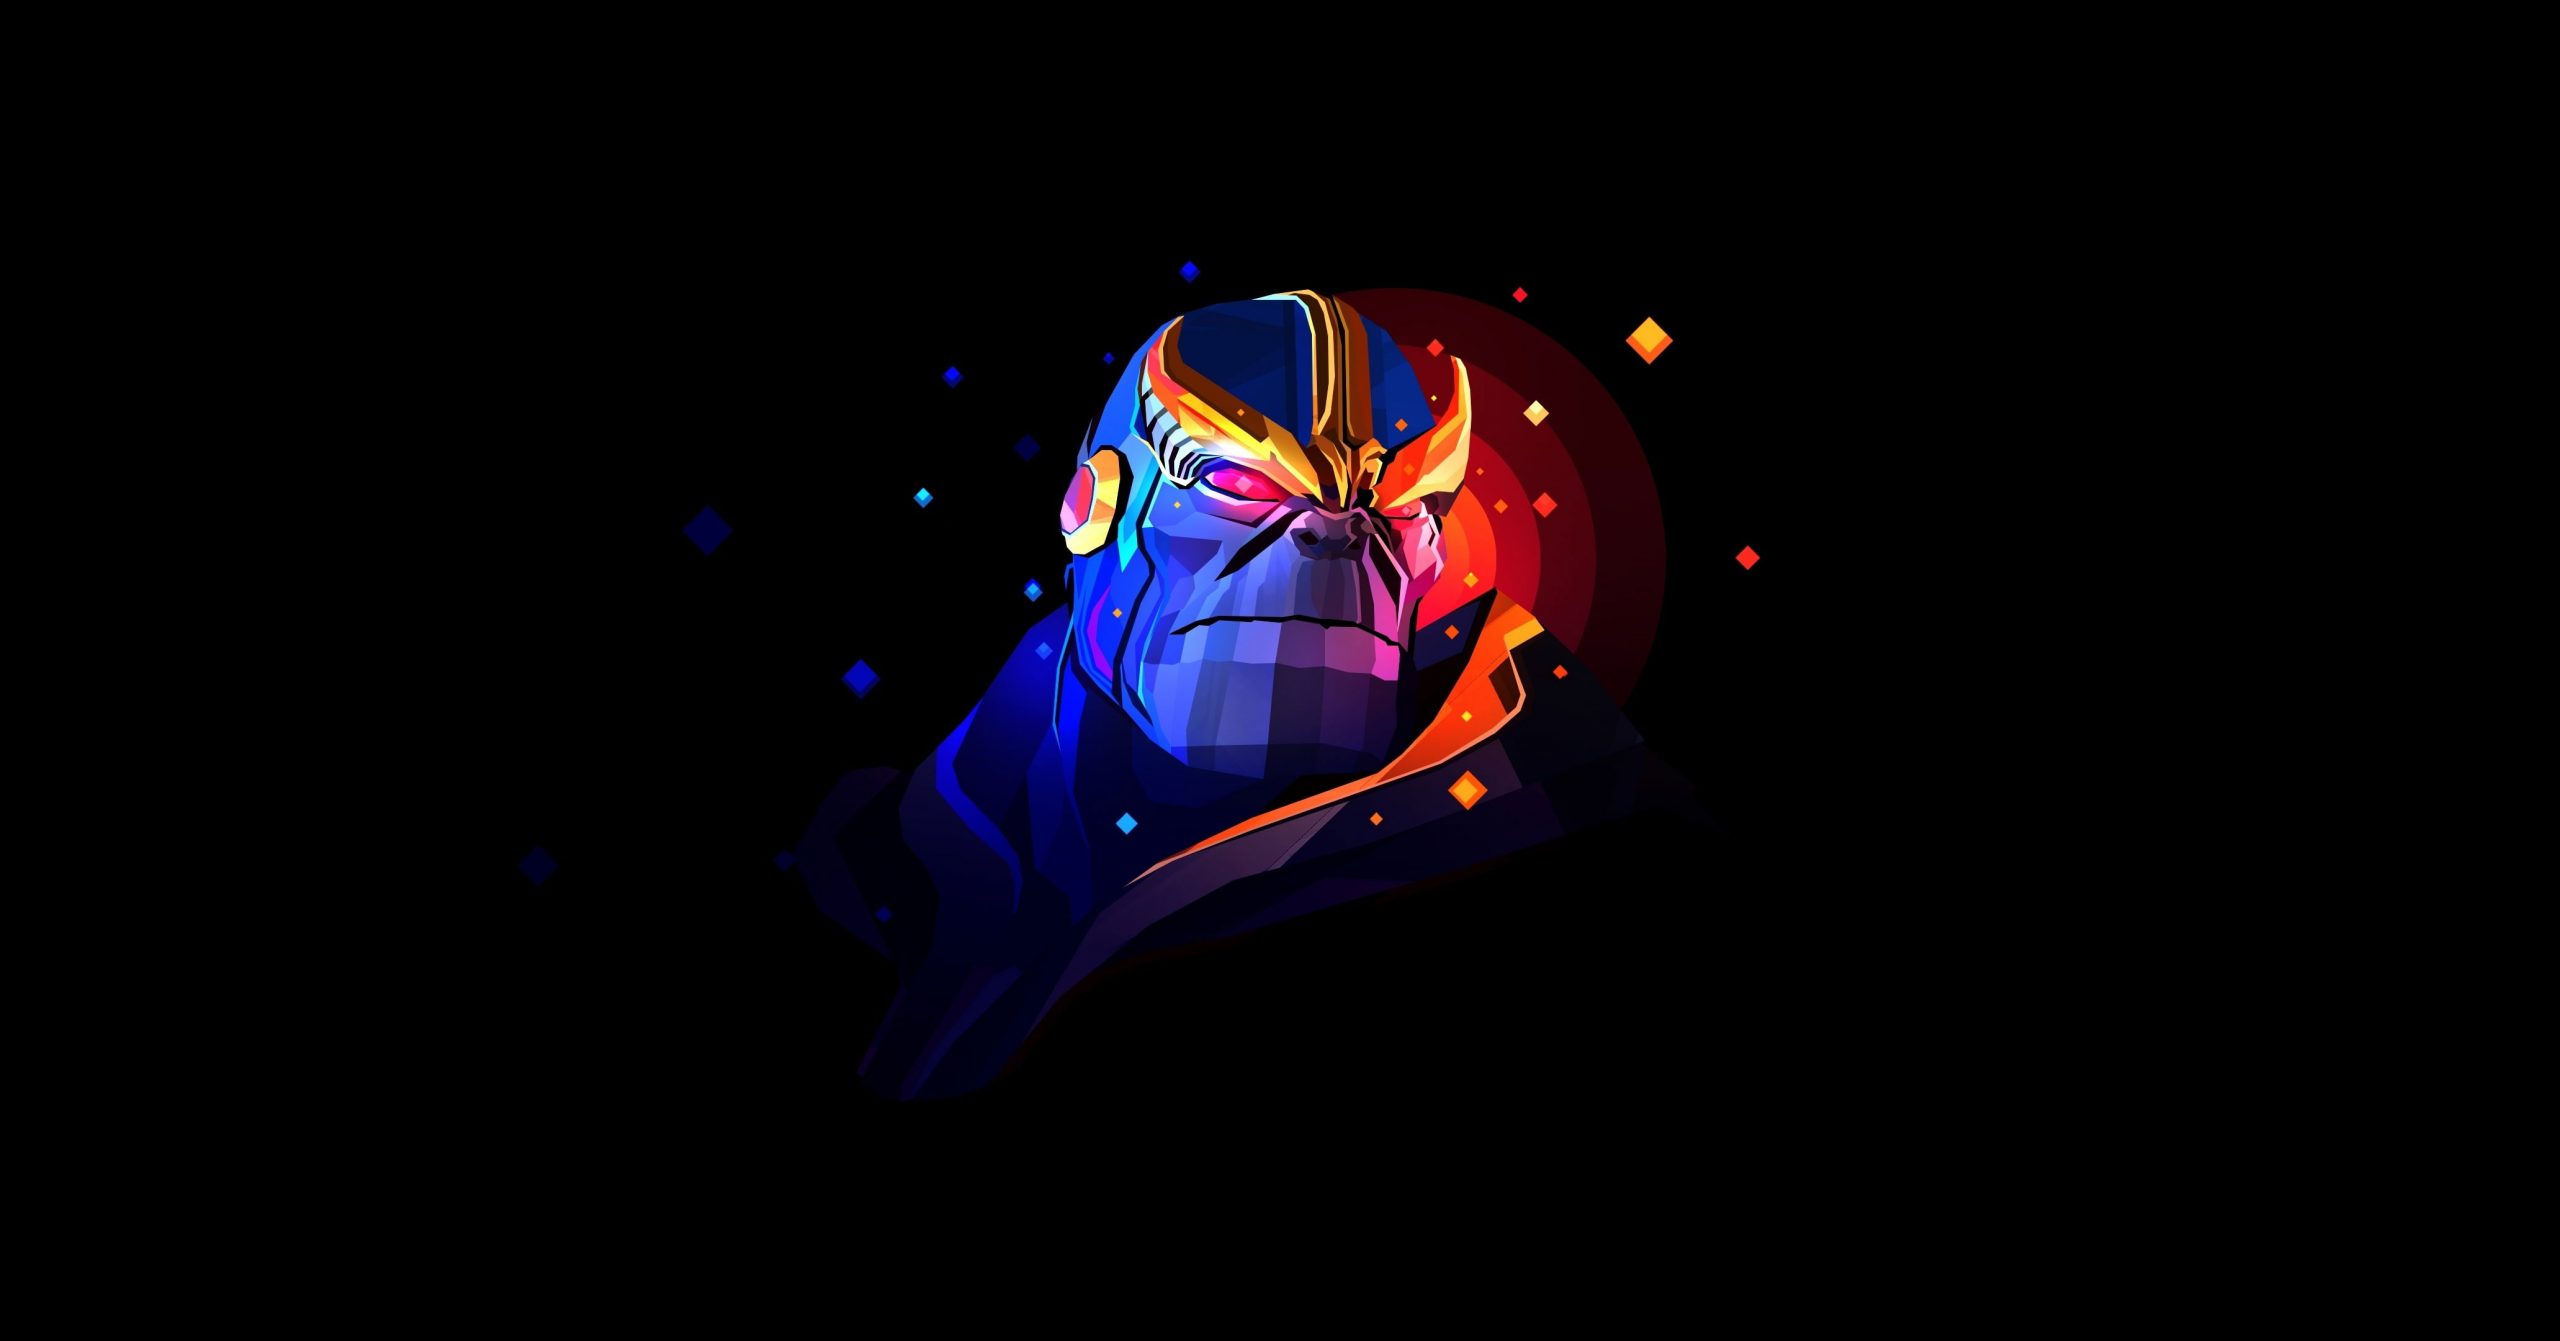 Thanos wallpaper, Avengers Infinity War, villain, digital art, illustration